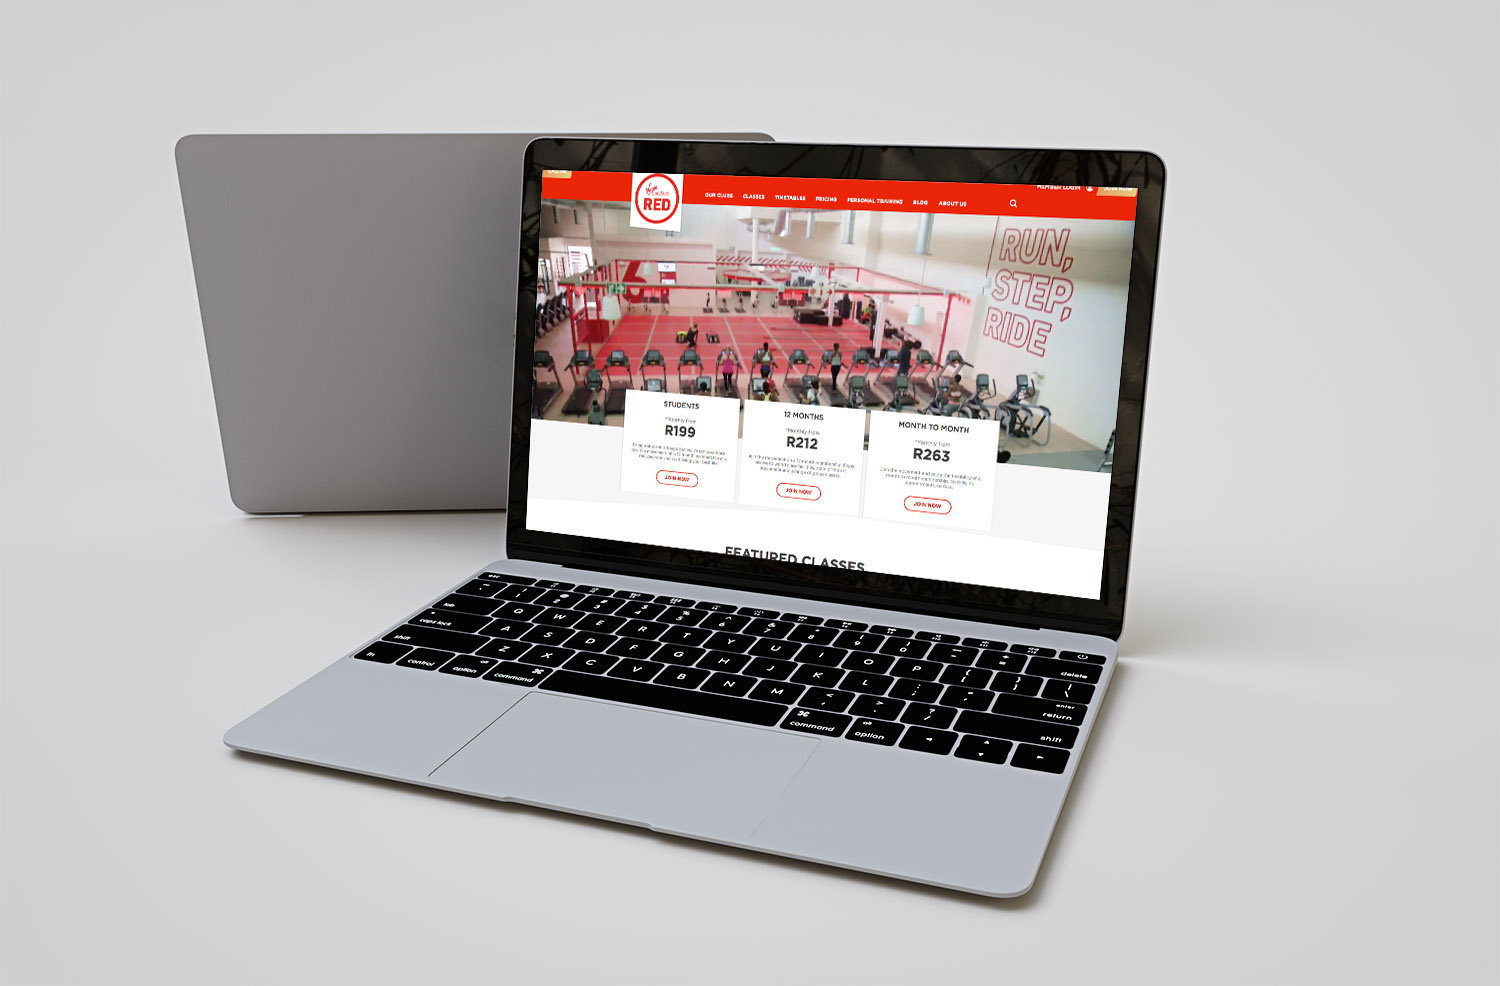 Virgin Red website displayedon a laptop